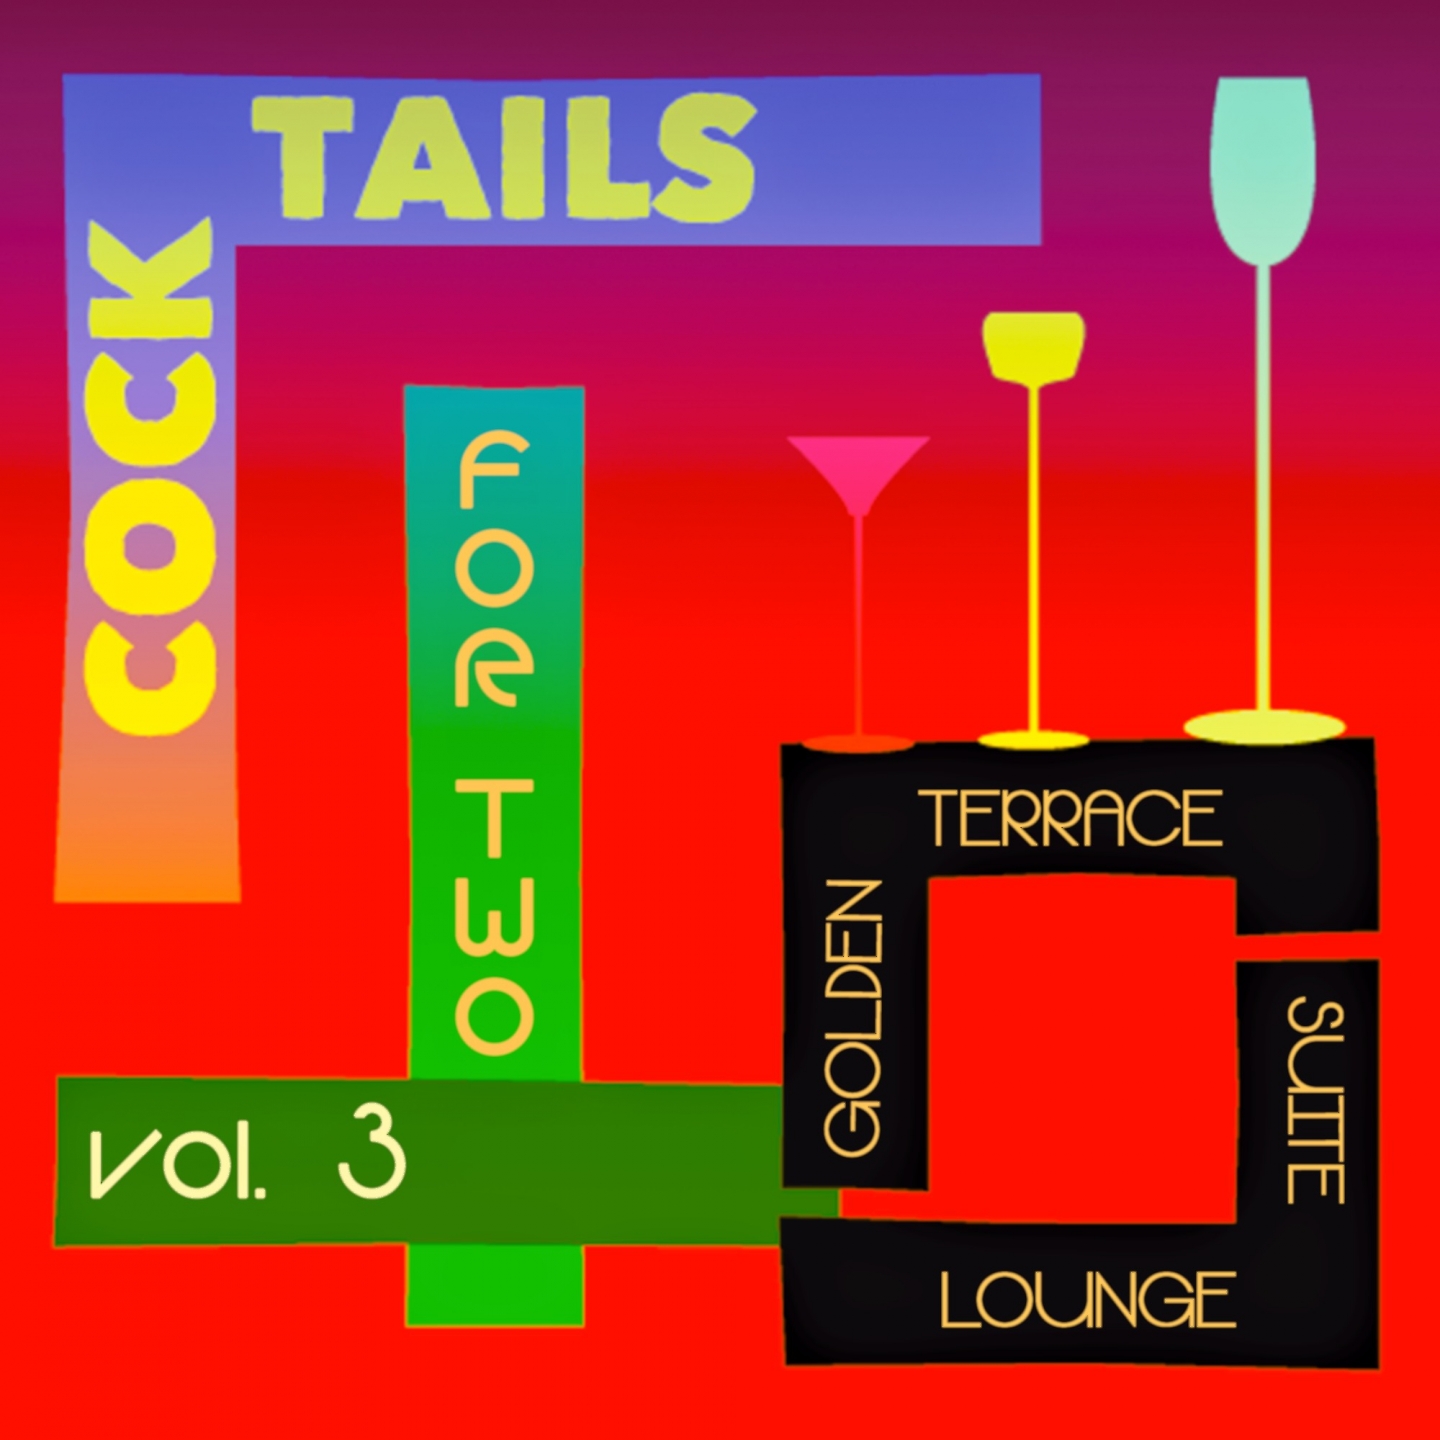 Cocktails for Two, Vol. 3 (Golden Terrace Suite Lounge)